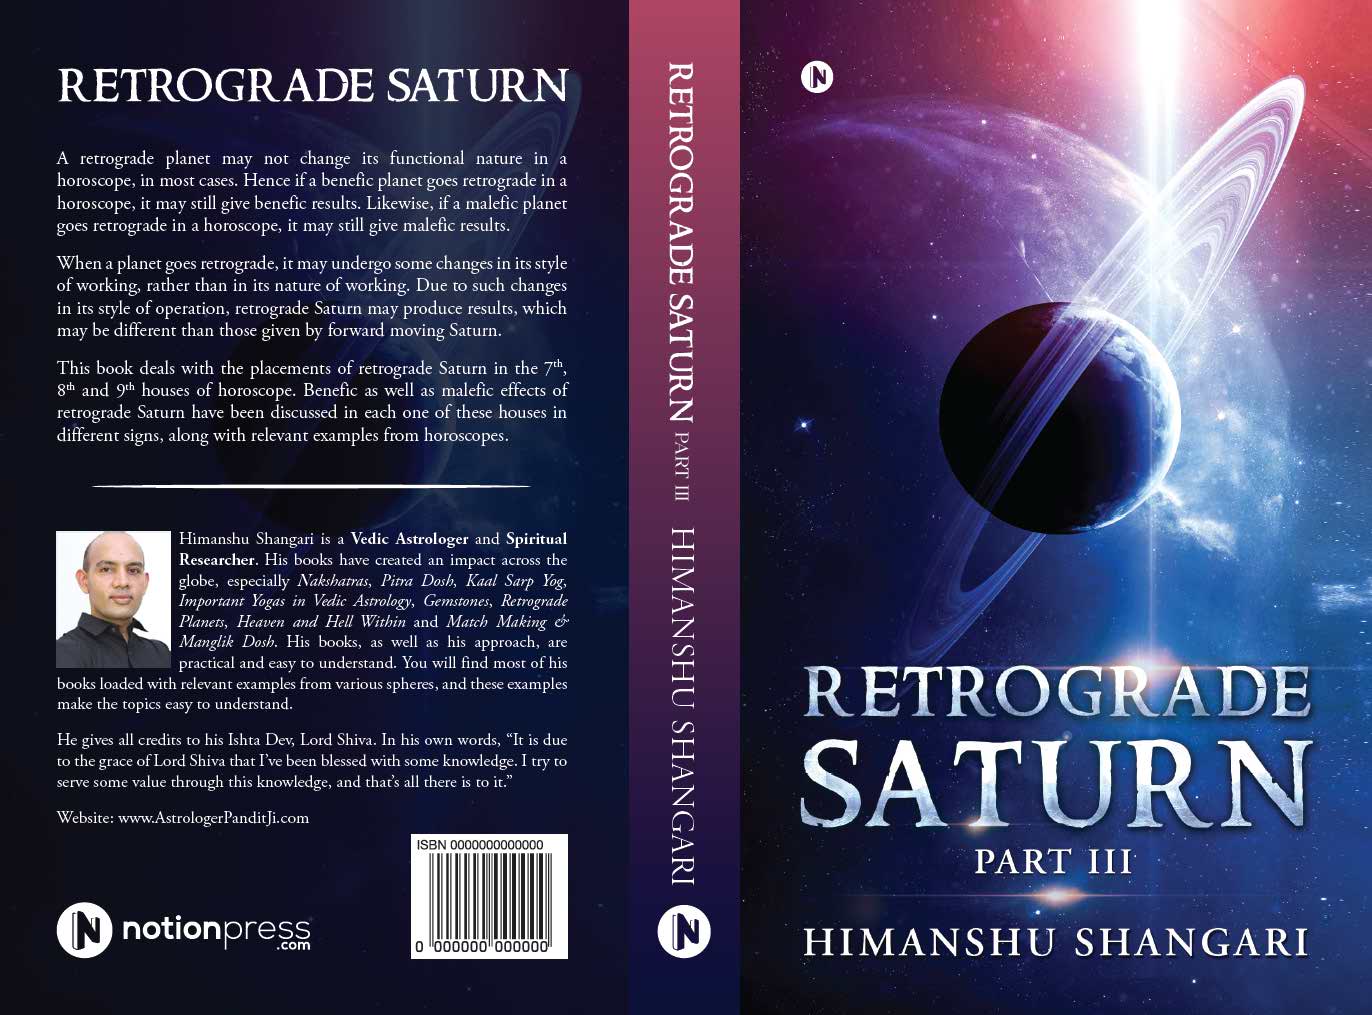 Retrograde Saturn Part 3